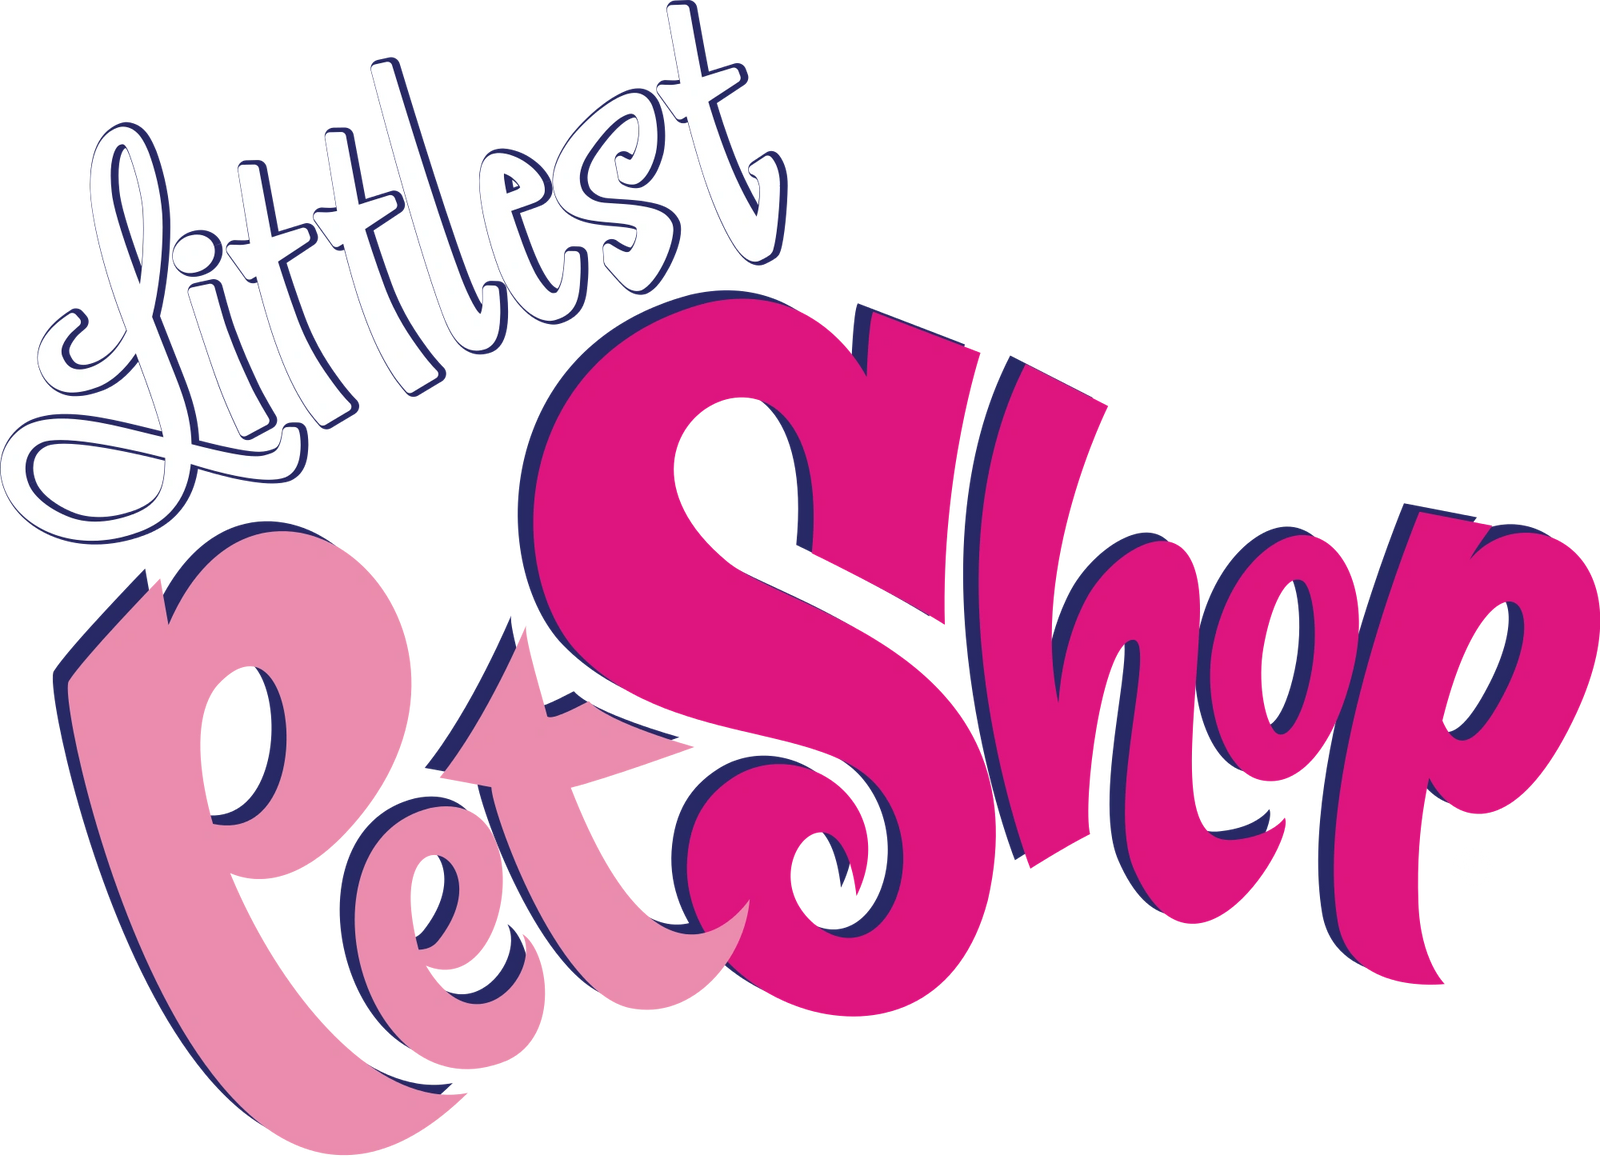 Pet Shop logo.